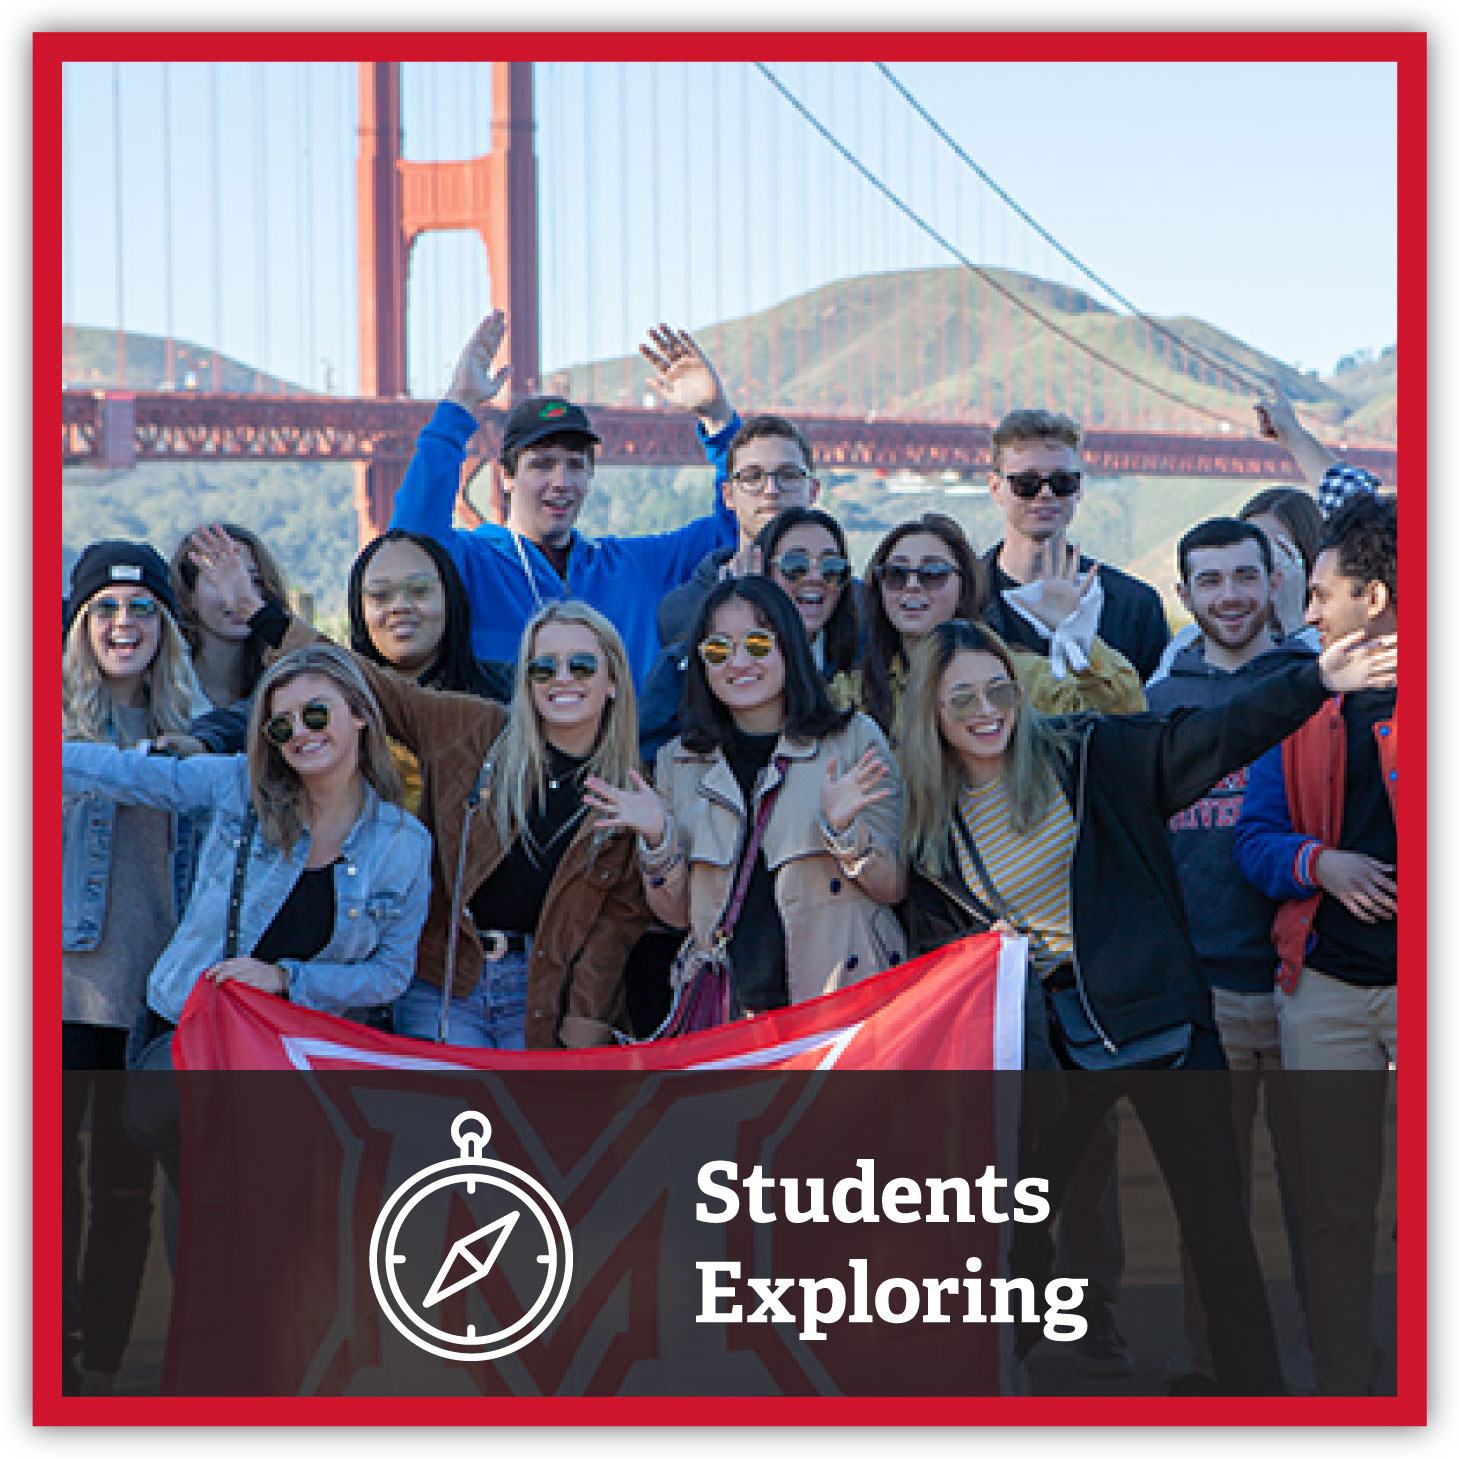 Students in front of bridge at San Francisco. Students Exploring.